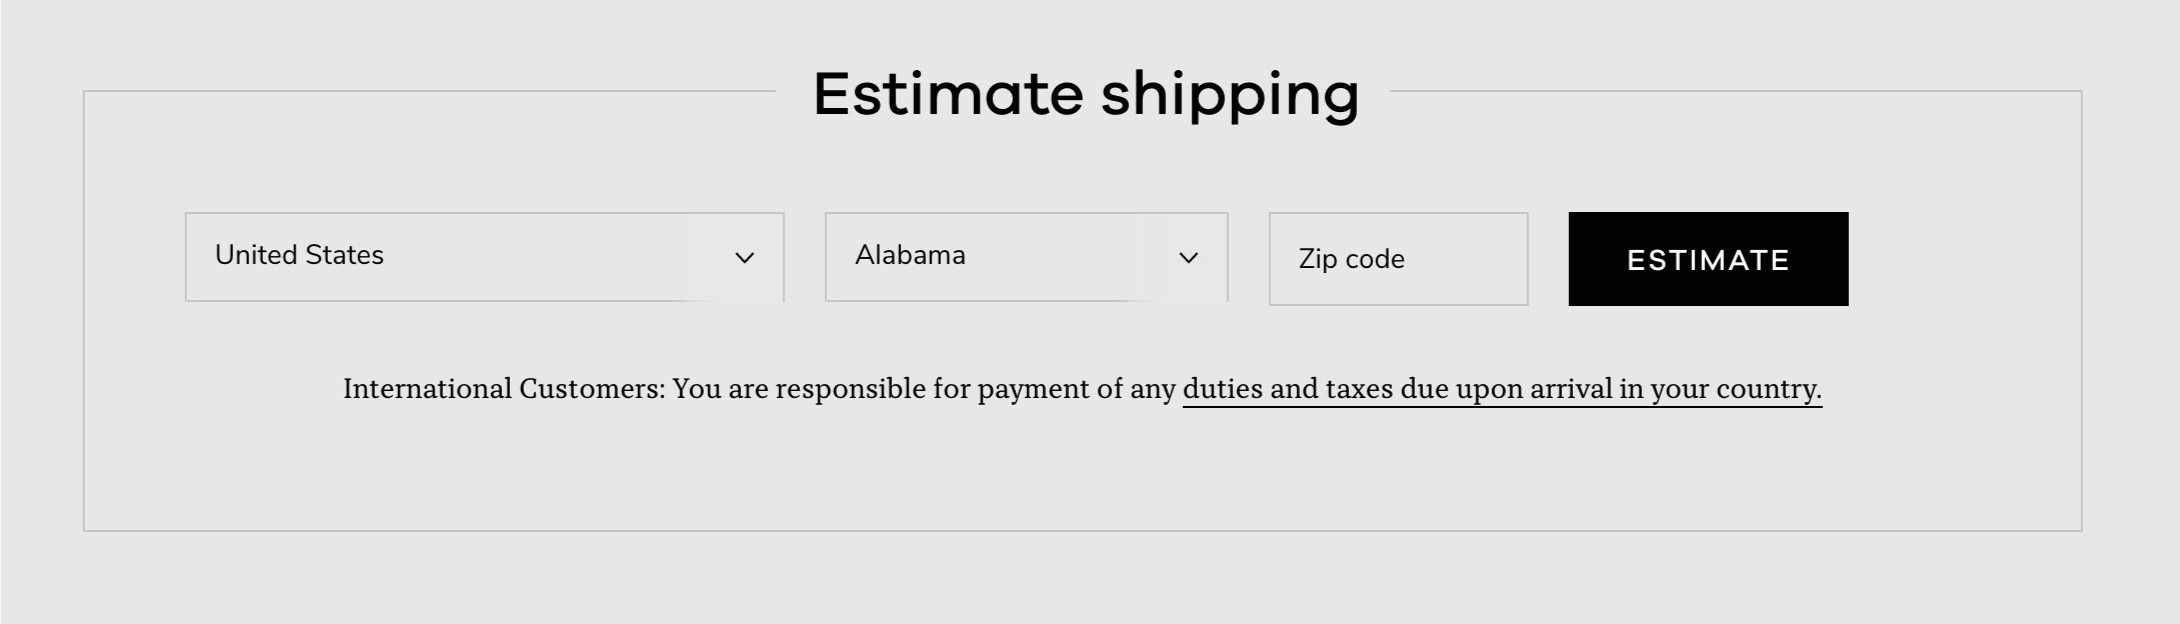 shipping-estimate-in-cart.jpg